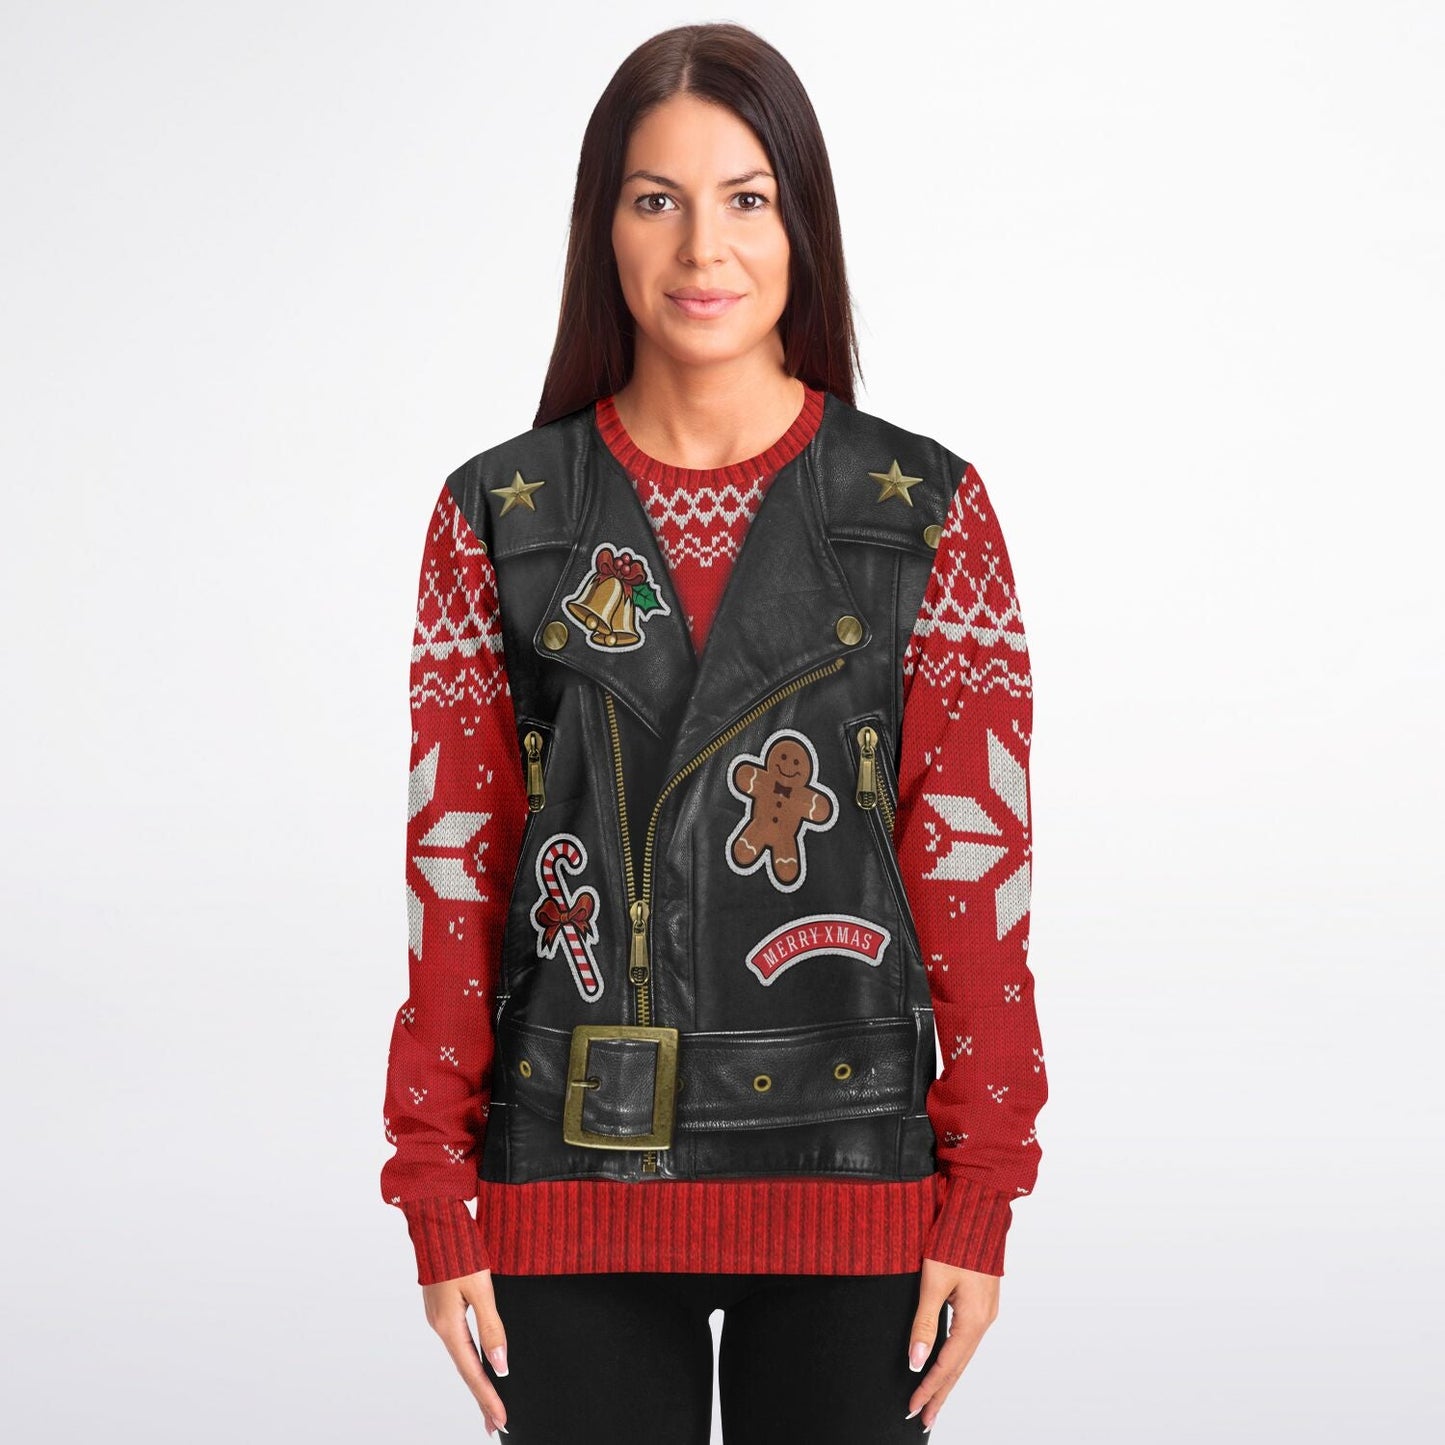 Sons of Santa Biker Vest Ugly Christmas Sweatshirt Fashion Sweatshirt - AOP Subliminator 